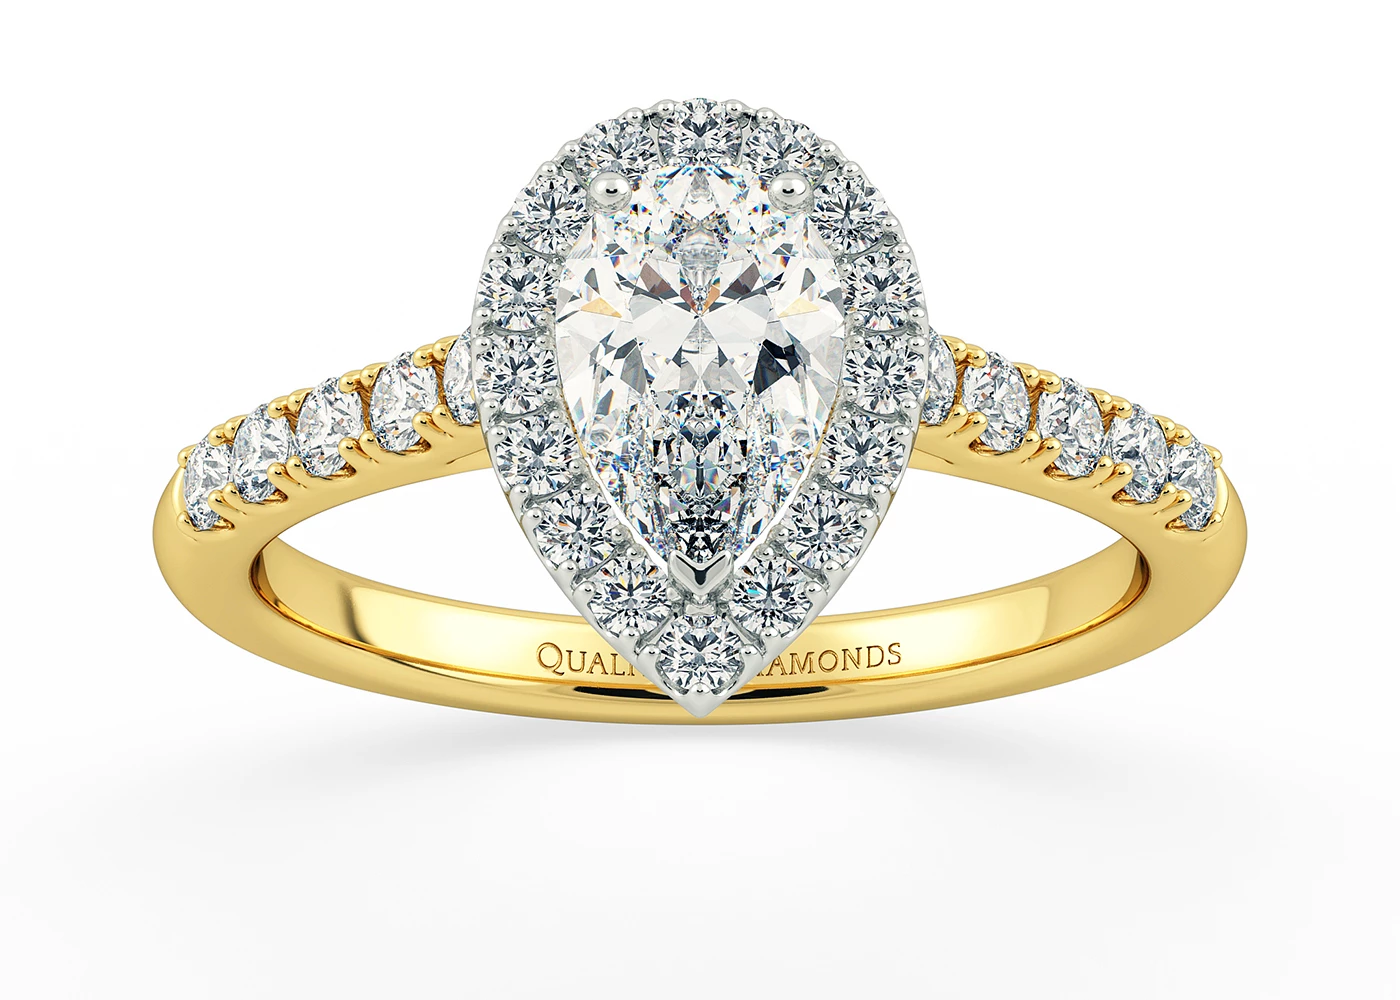 Two Carat Halo Pear Diamond Ring in 18K Yellow Gold